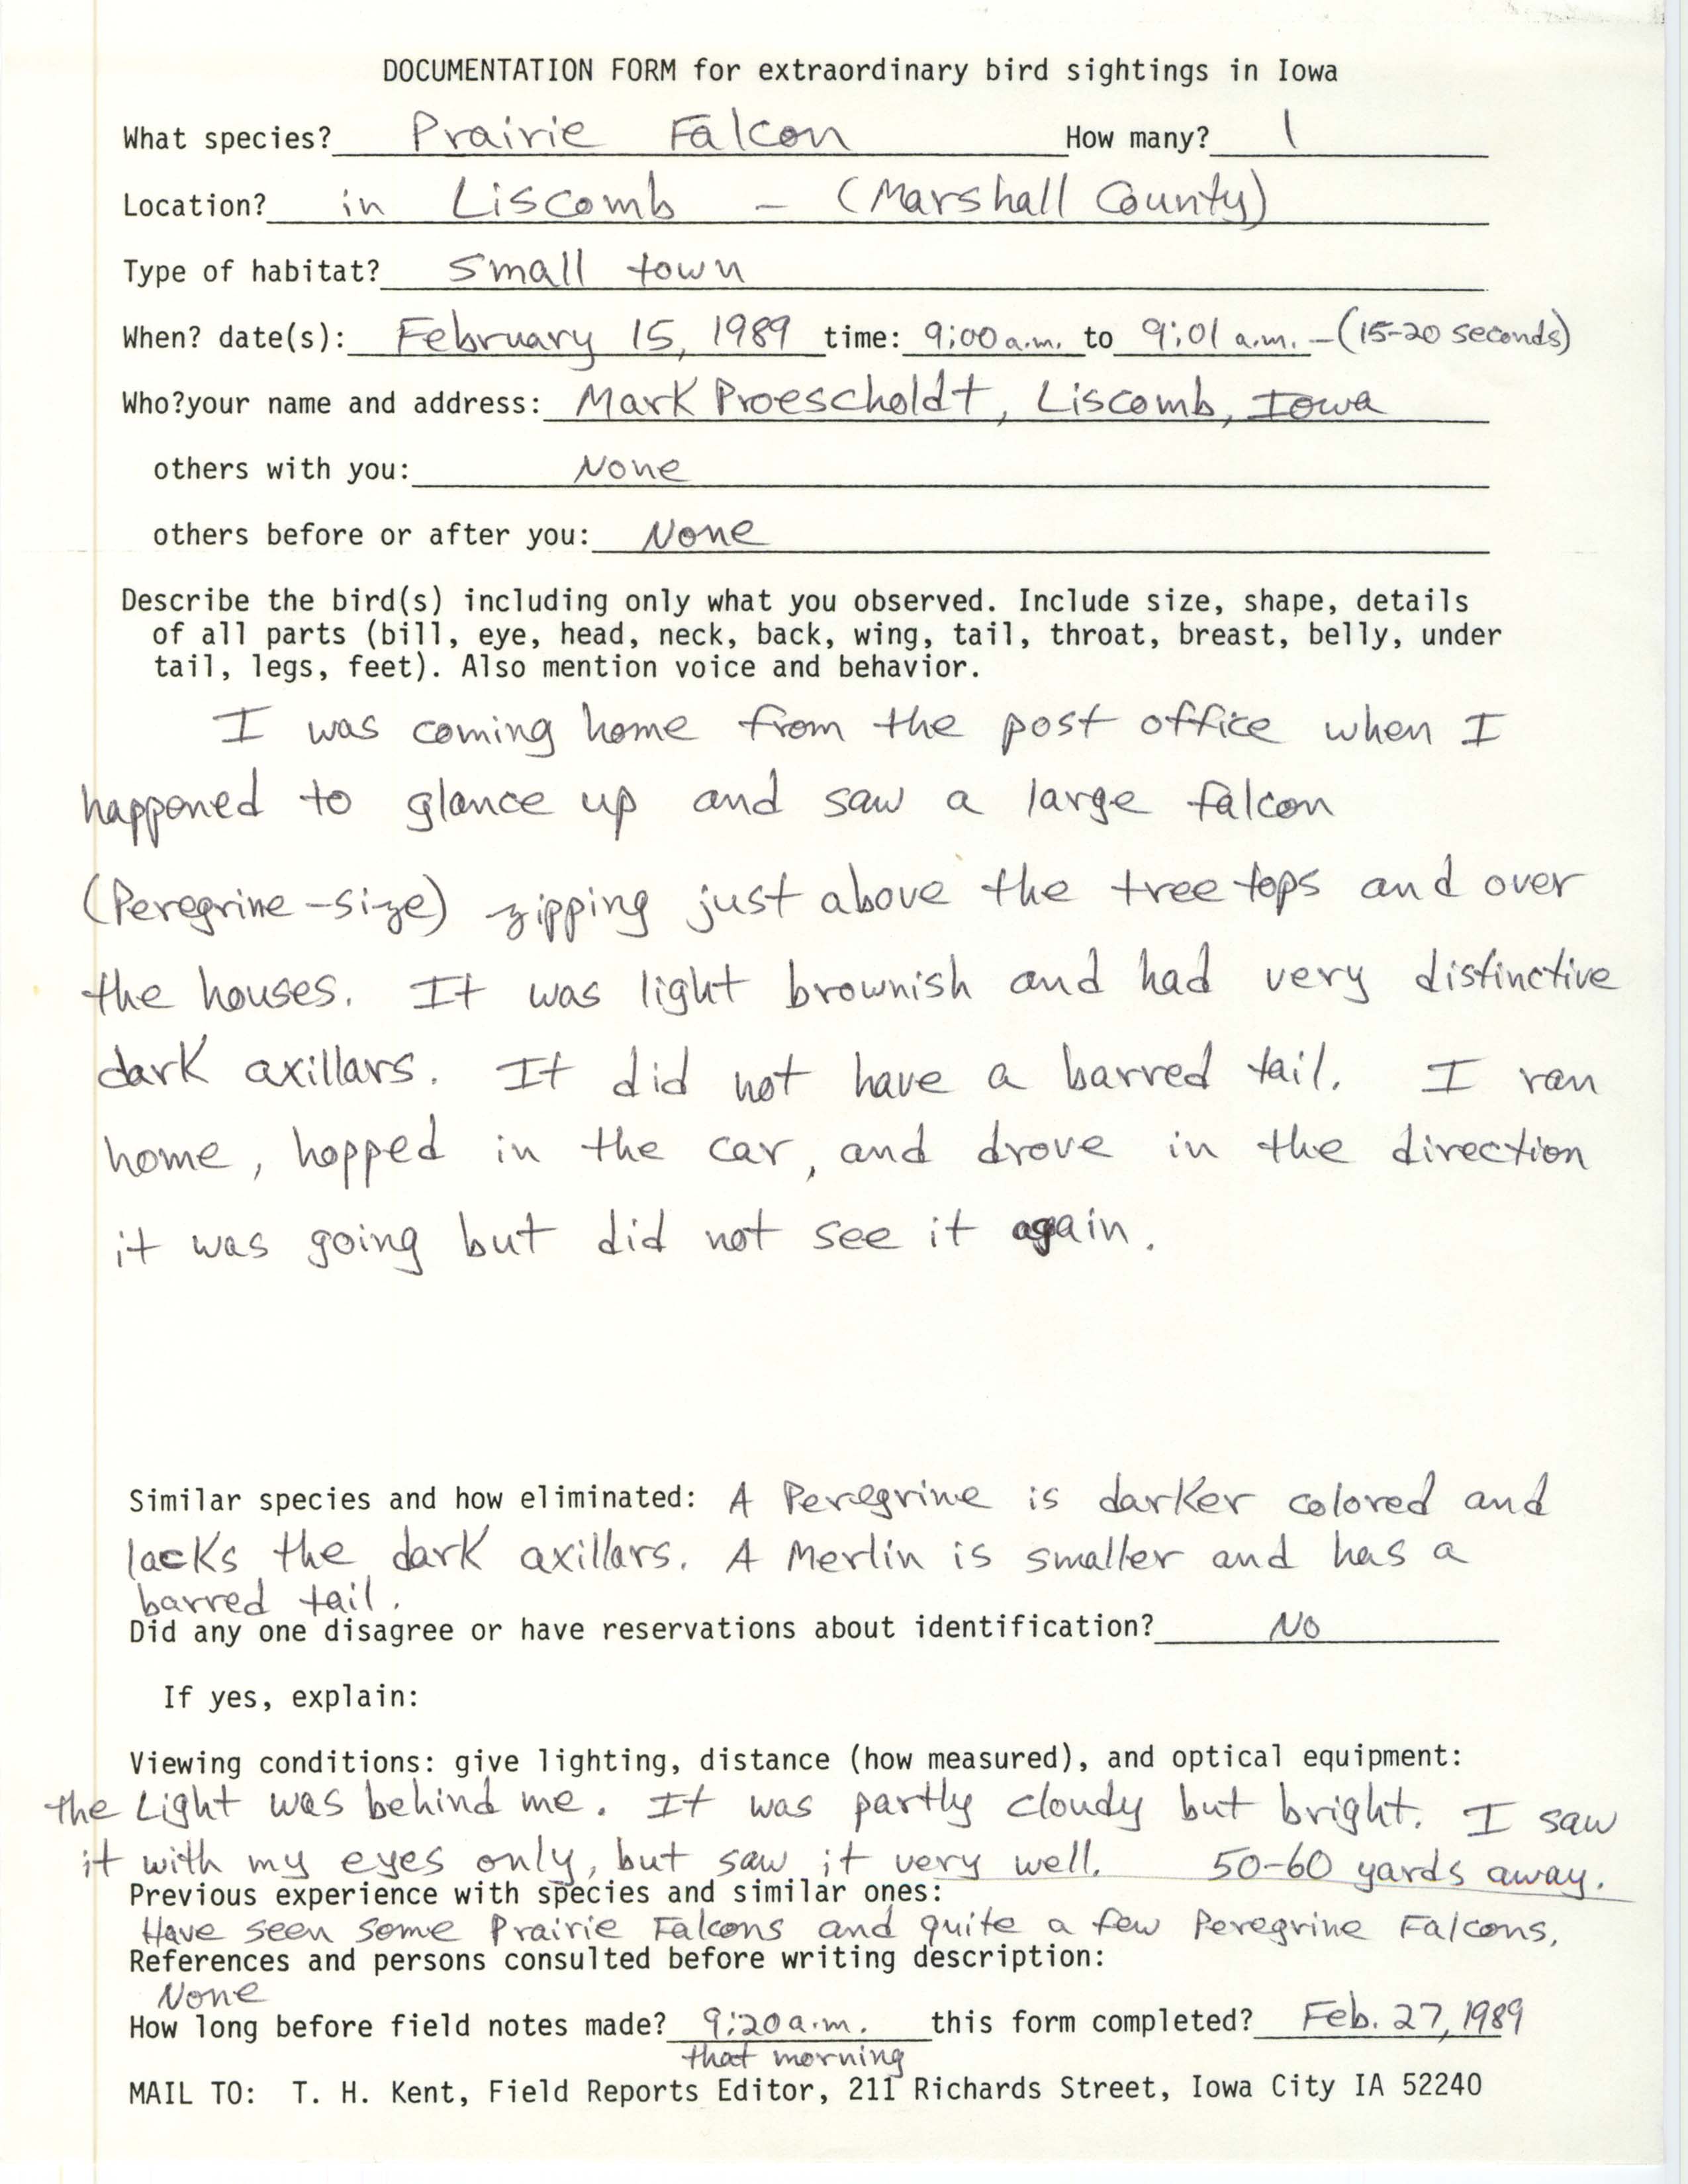 Rare bird documentation form for Prairie Falcon at Liscomb, 1989